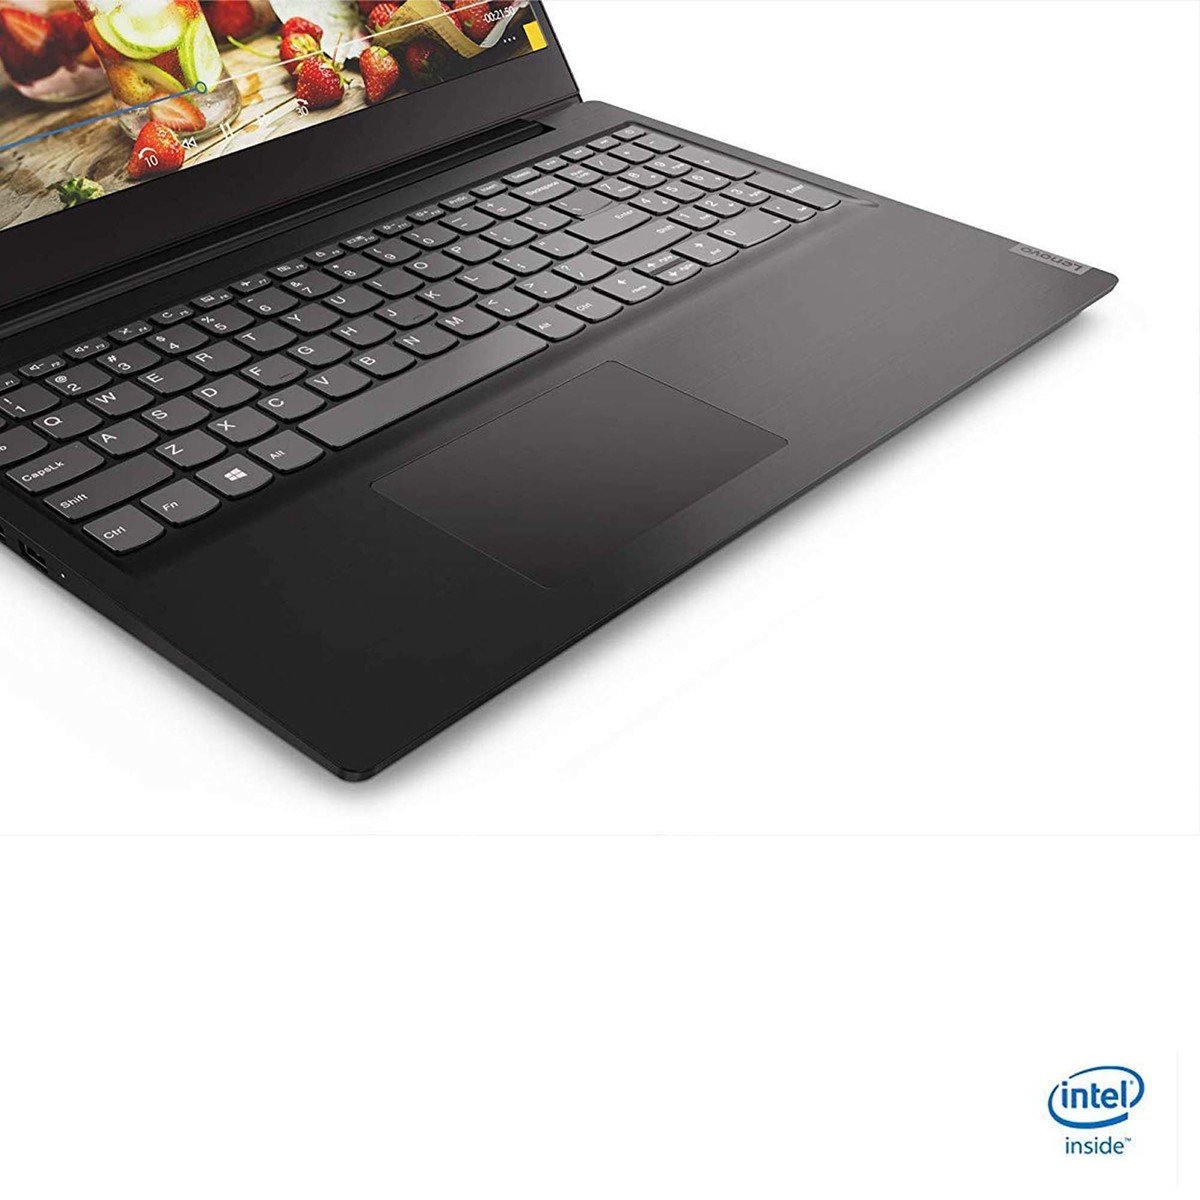 Lenovo Ideapad S145 Laptop,Intel Core i7,15.6 Inch, 1TB HDD,128GB SSD,8GB RAM,2GB GeForce MX230 Black